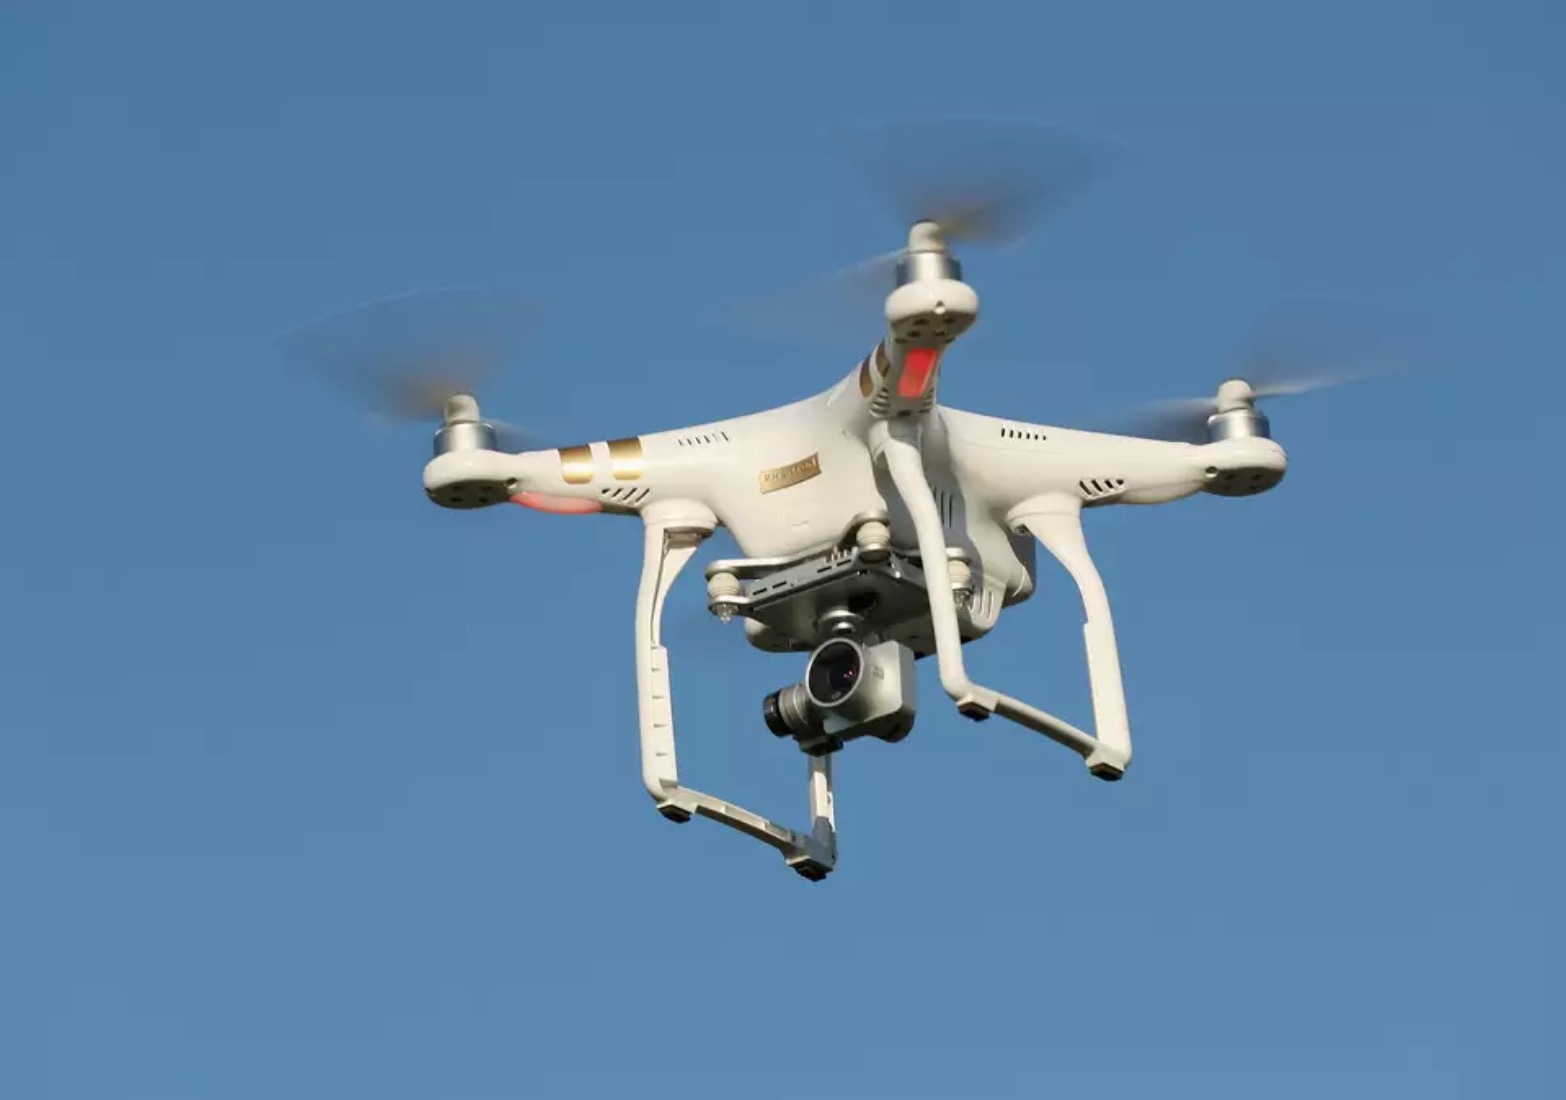 Drones to monitor wildlife violations soon